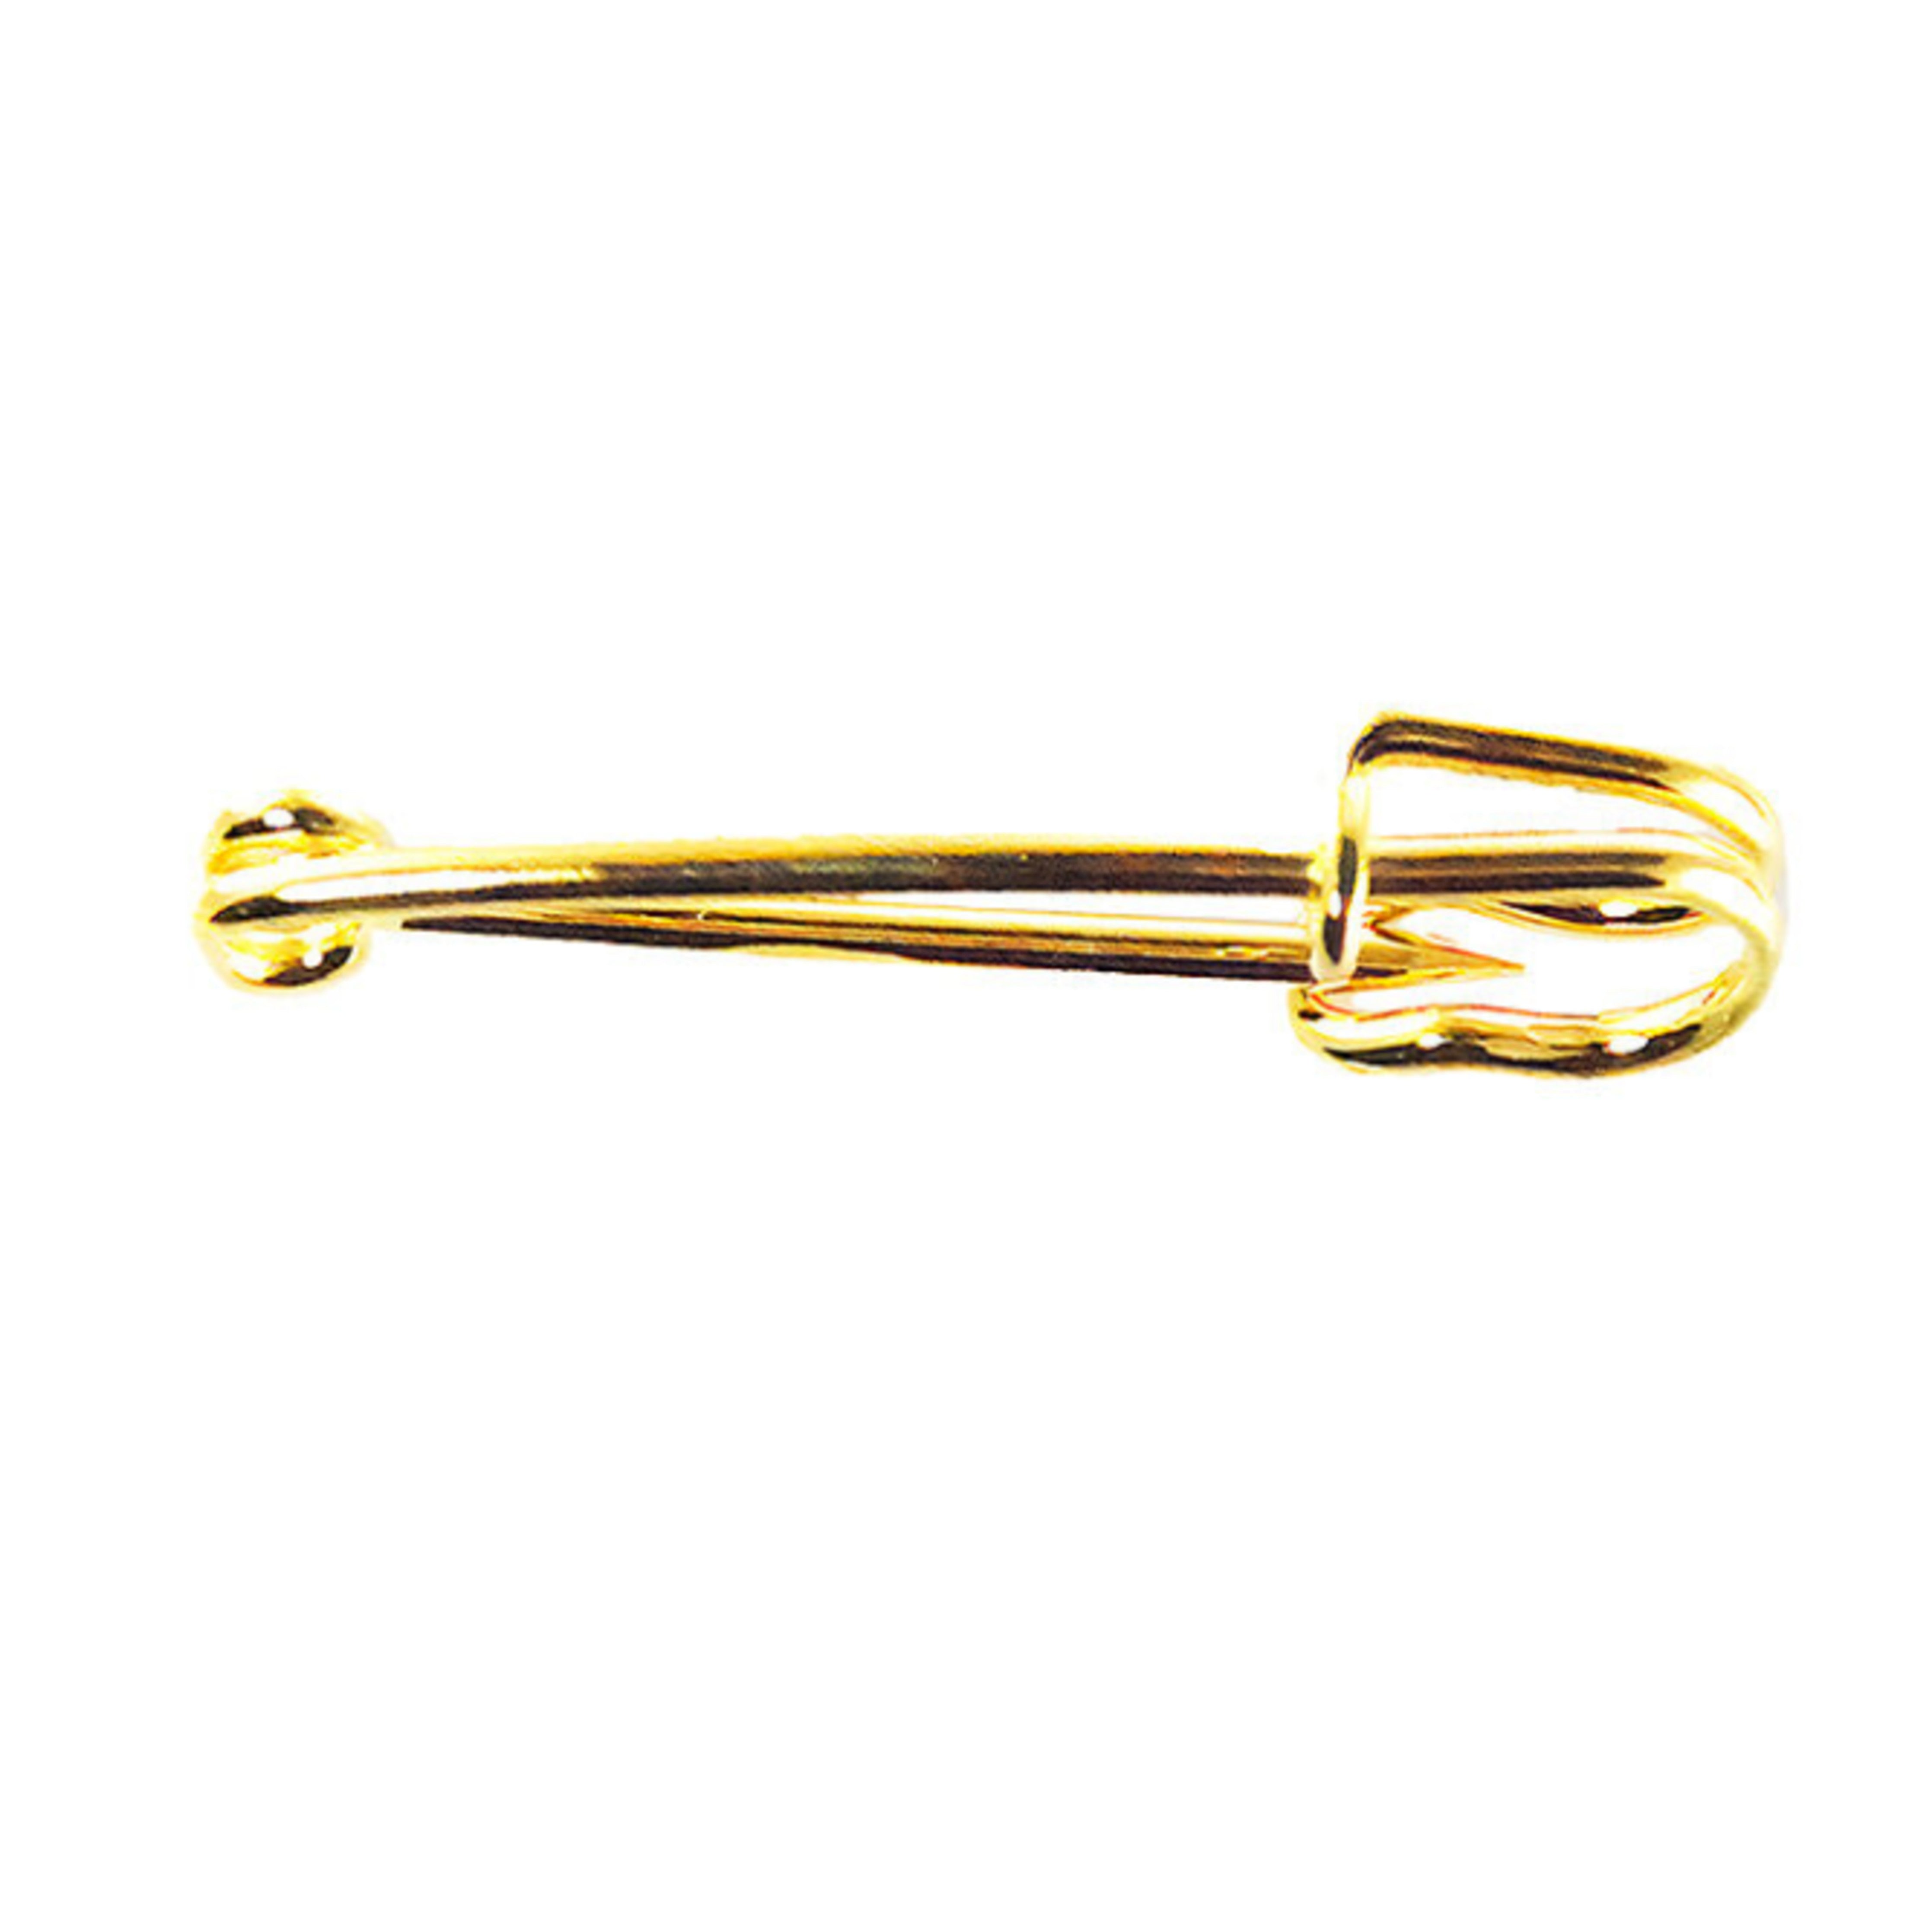 FTK - Stock Pin Steel Shank Gold 2.5